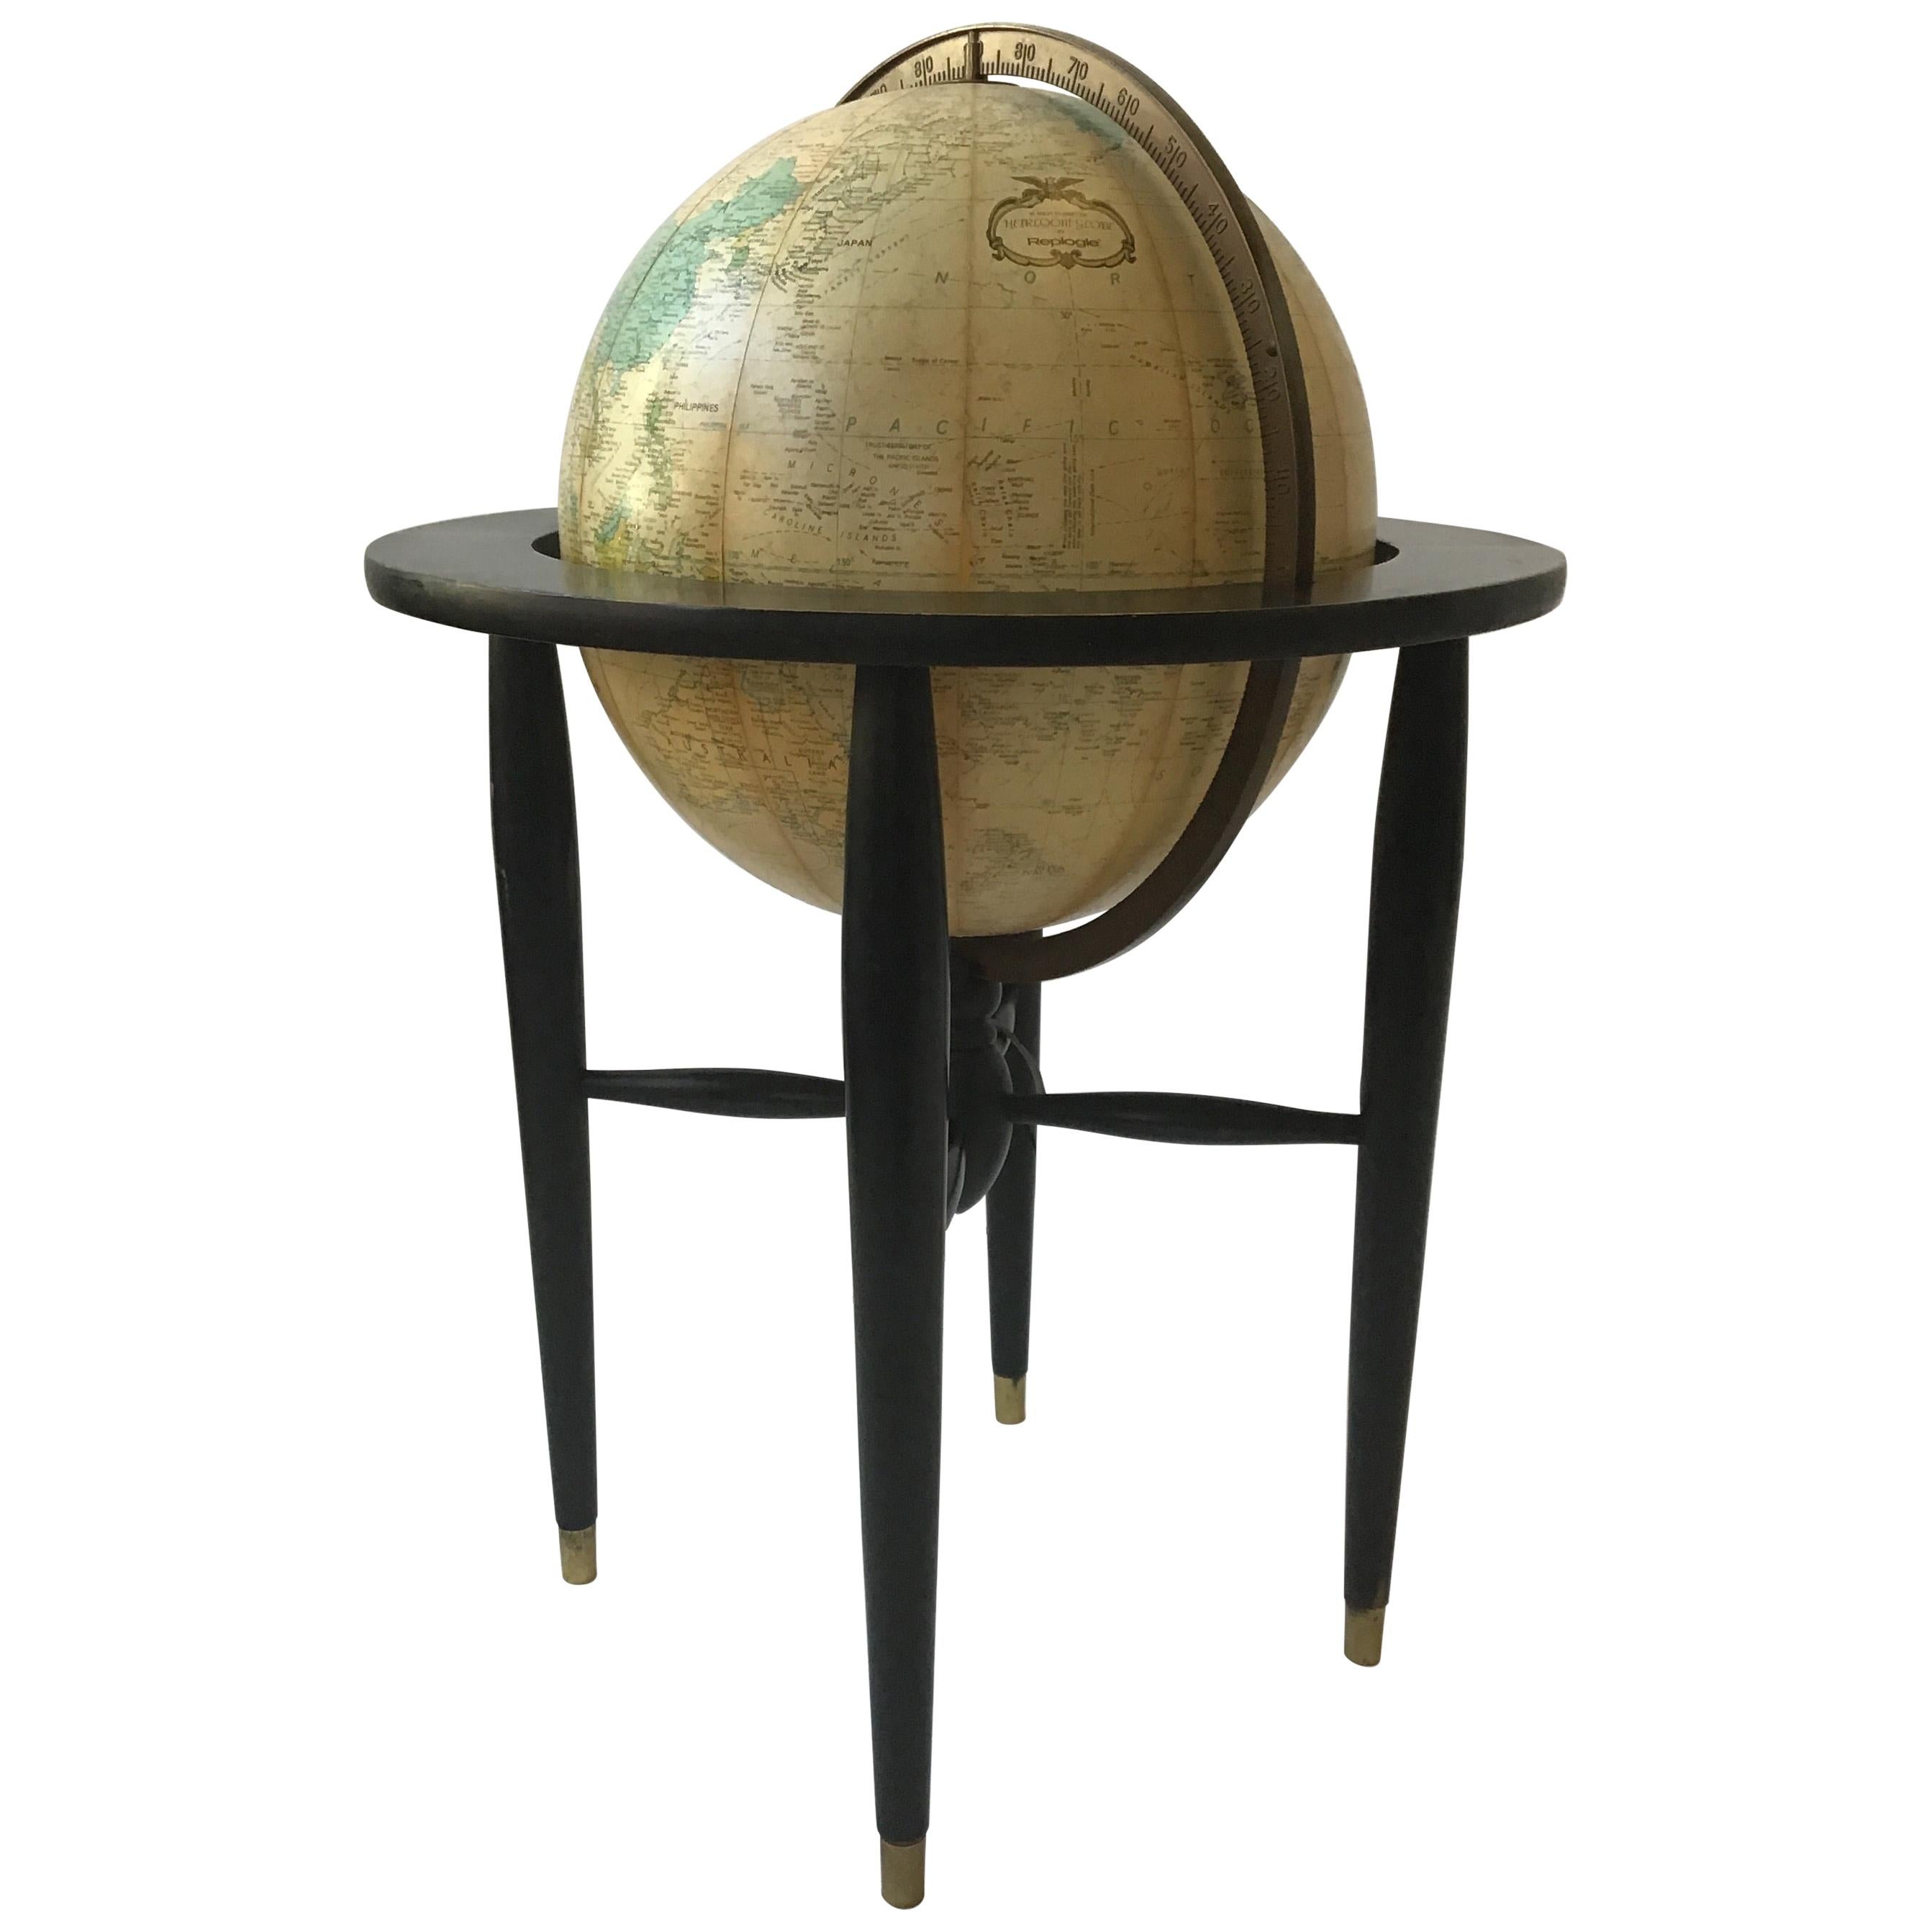 Midcentury Replogle Globe on Stand